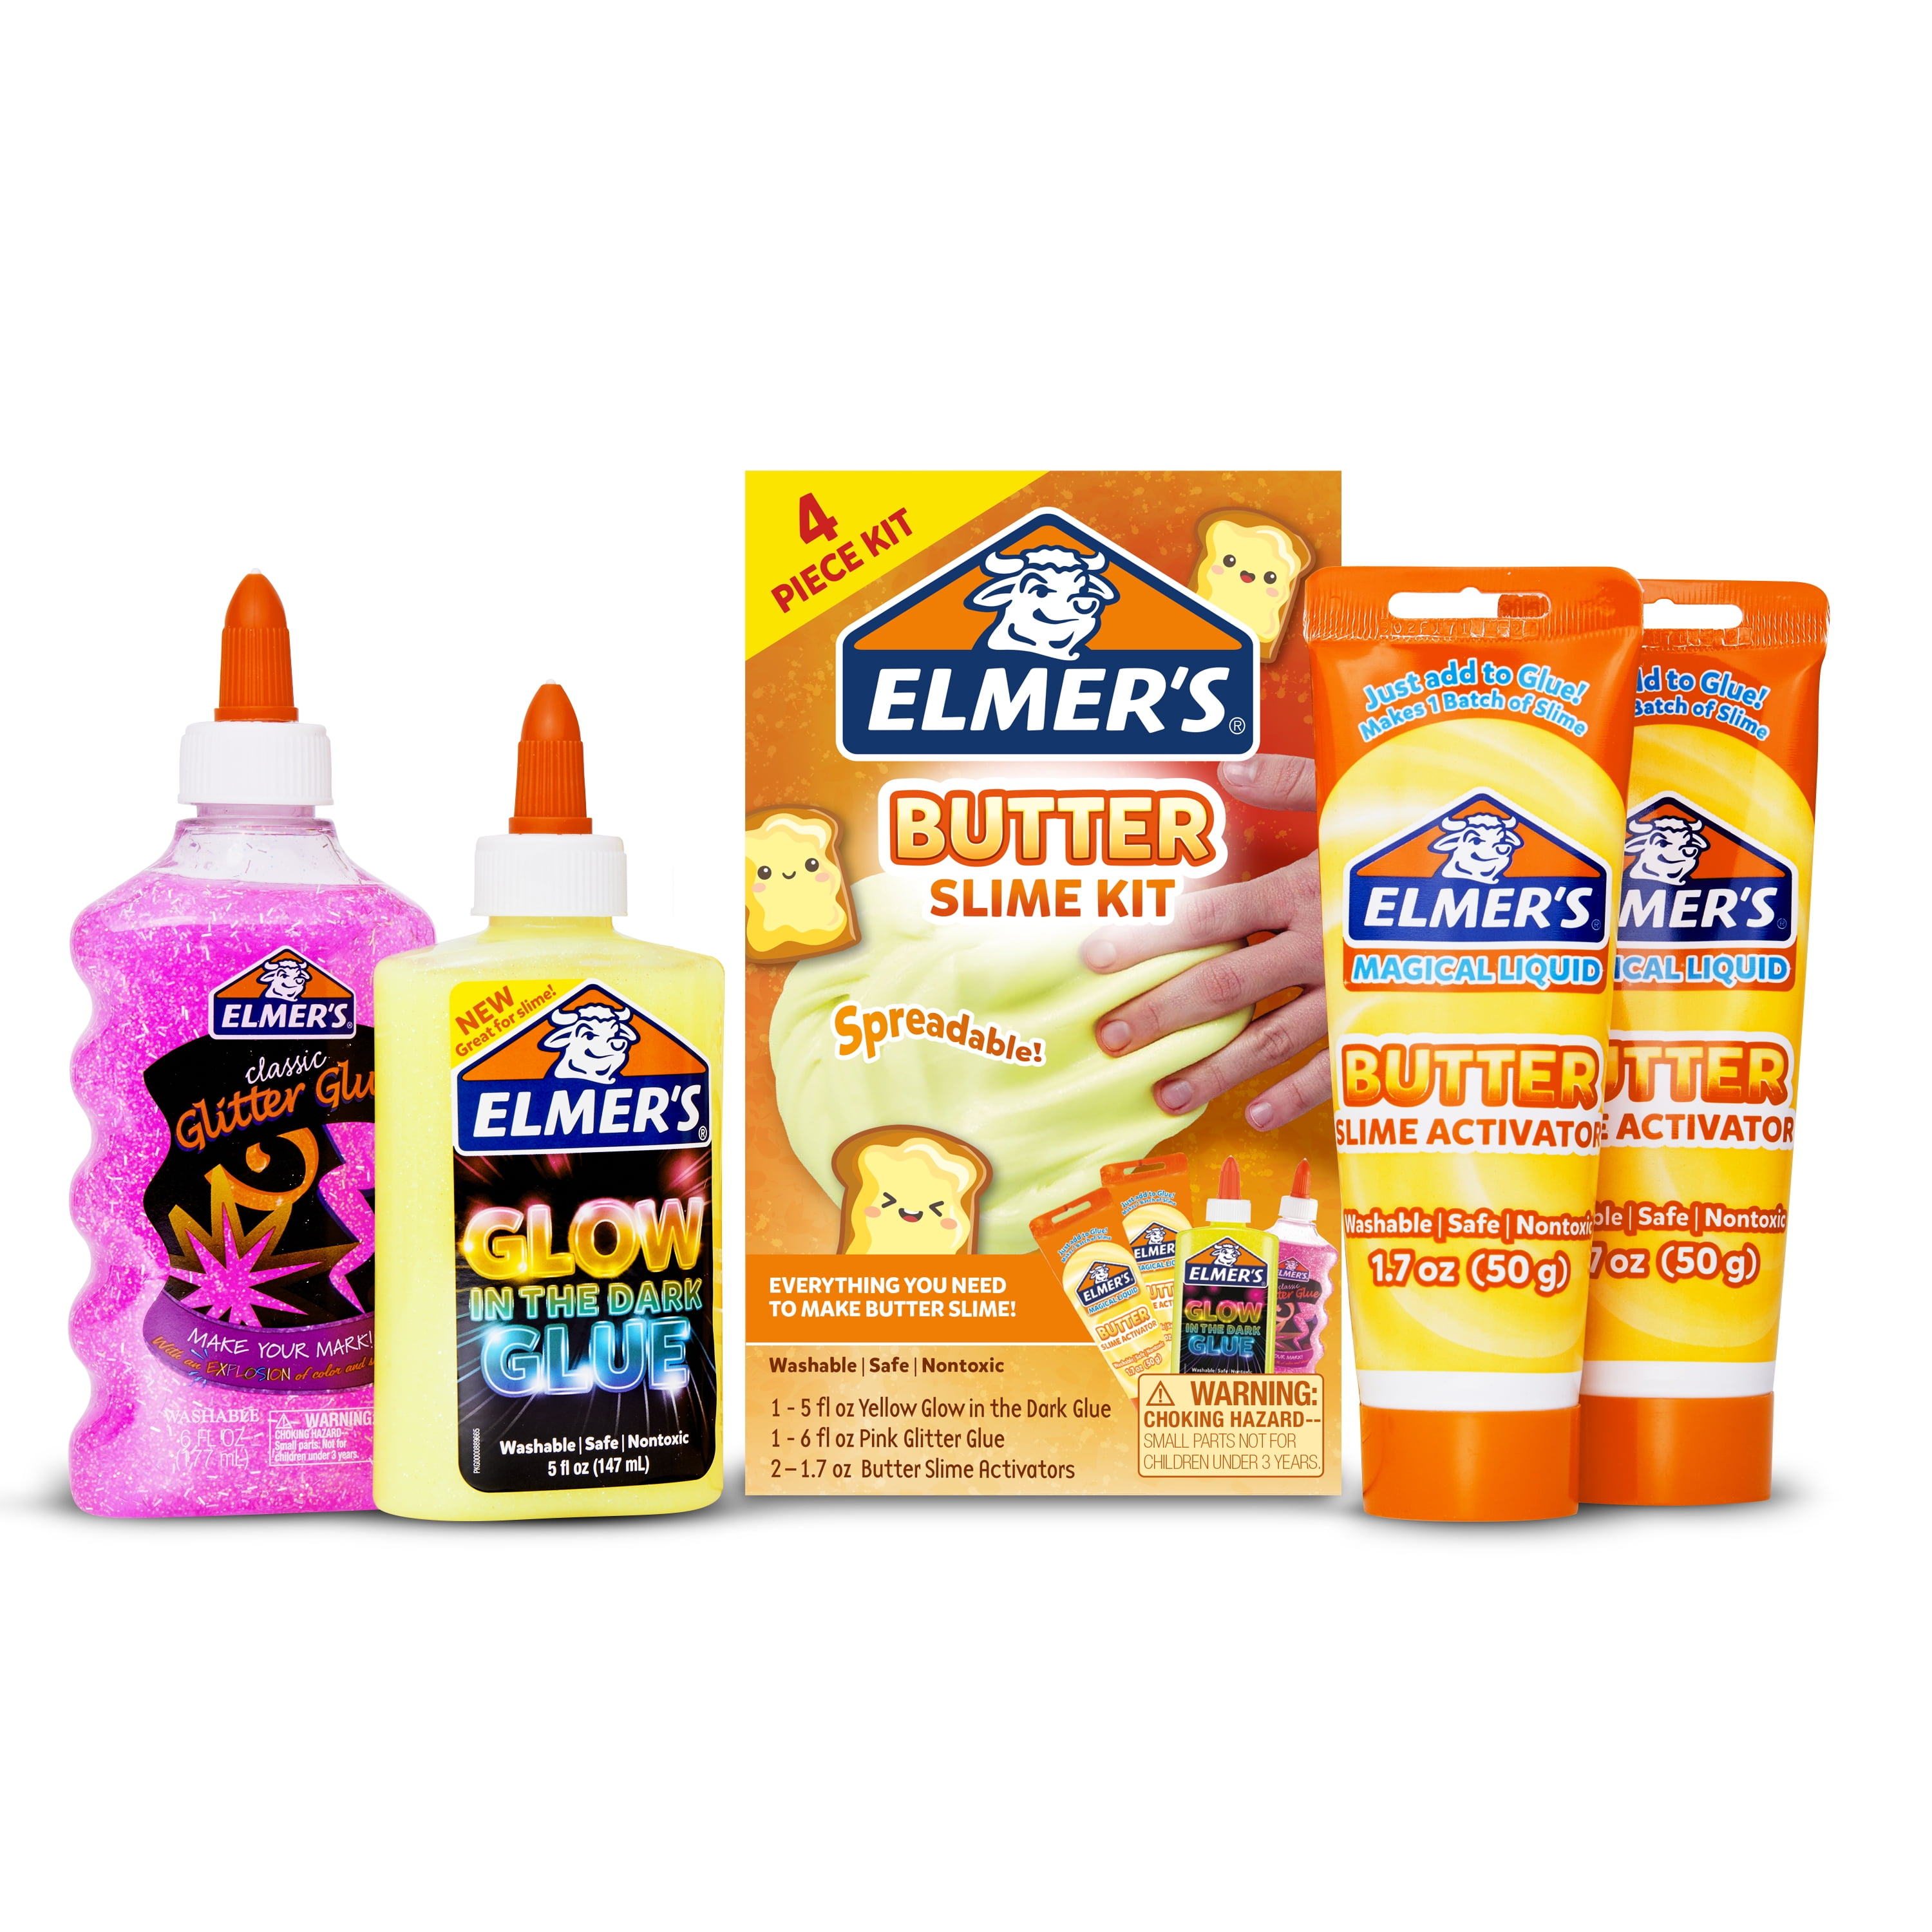 Elmer's Washable Glitter Glue, 6 oz Bottles, 3-Pack, Blu